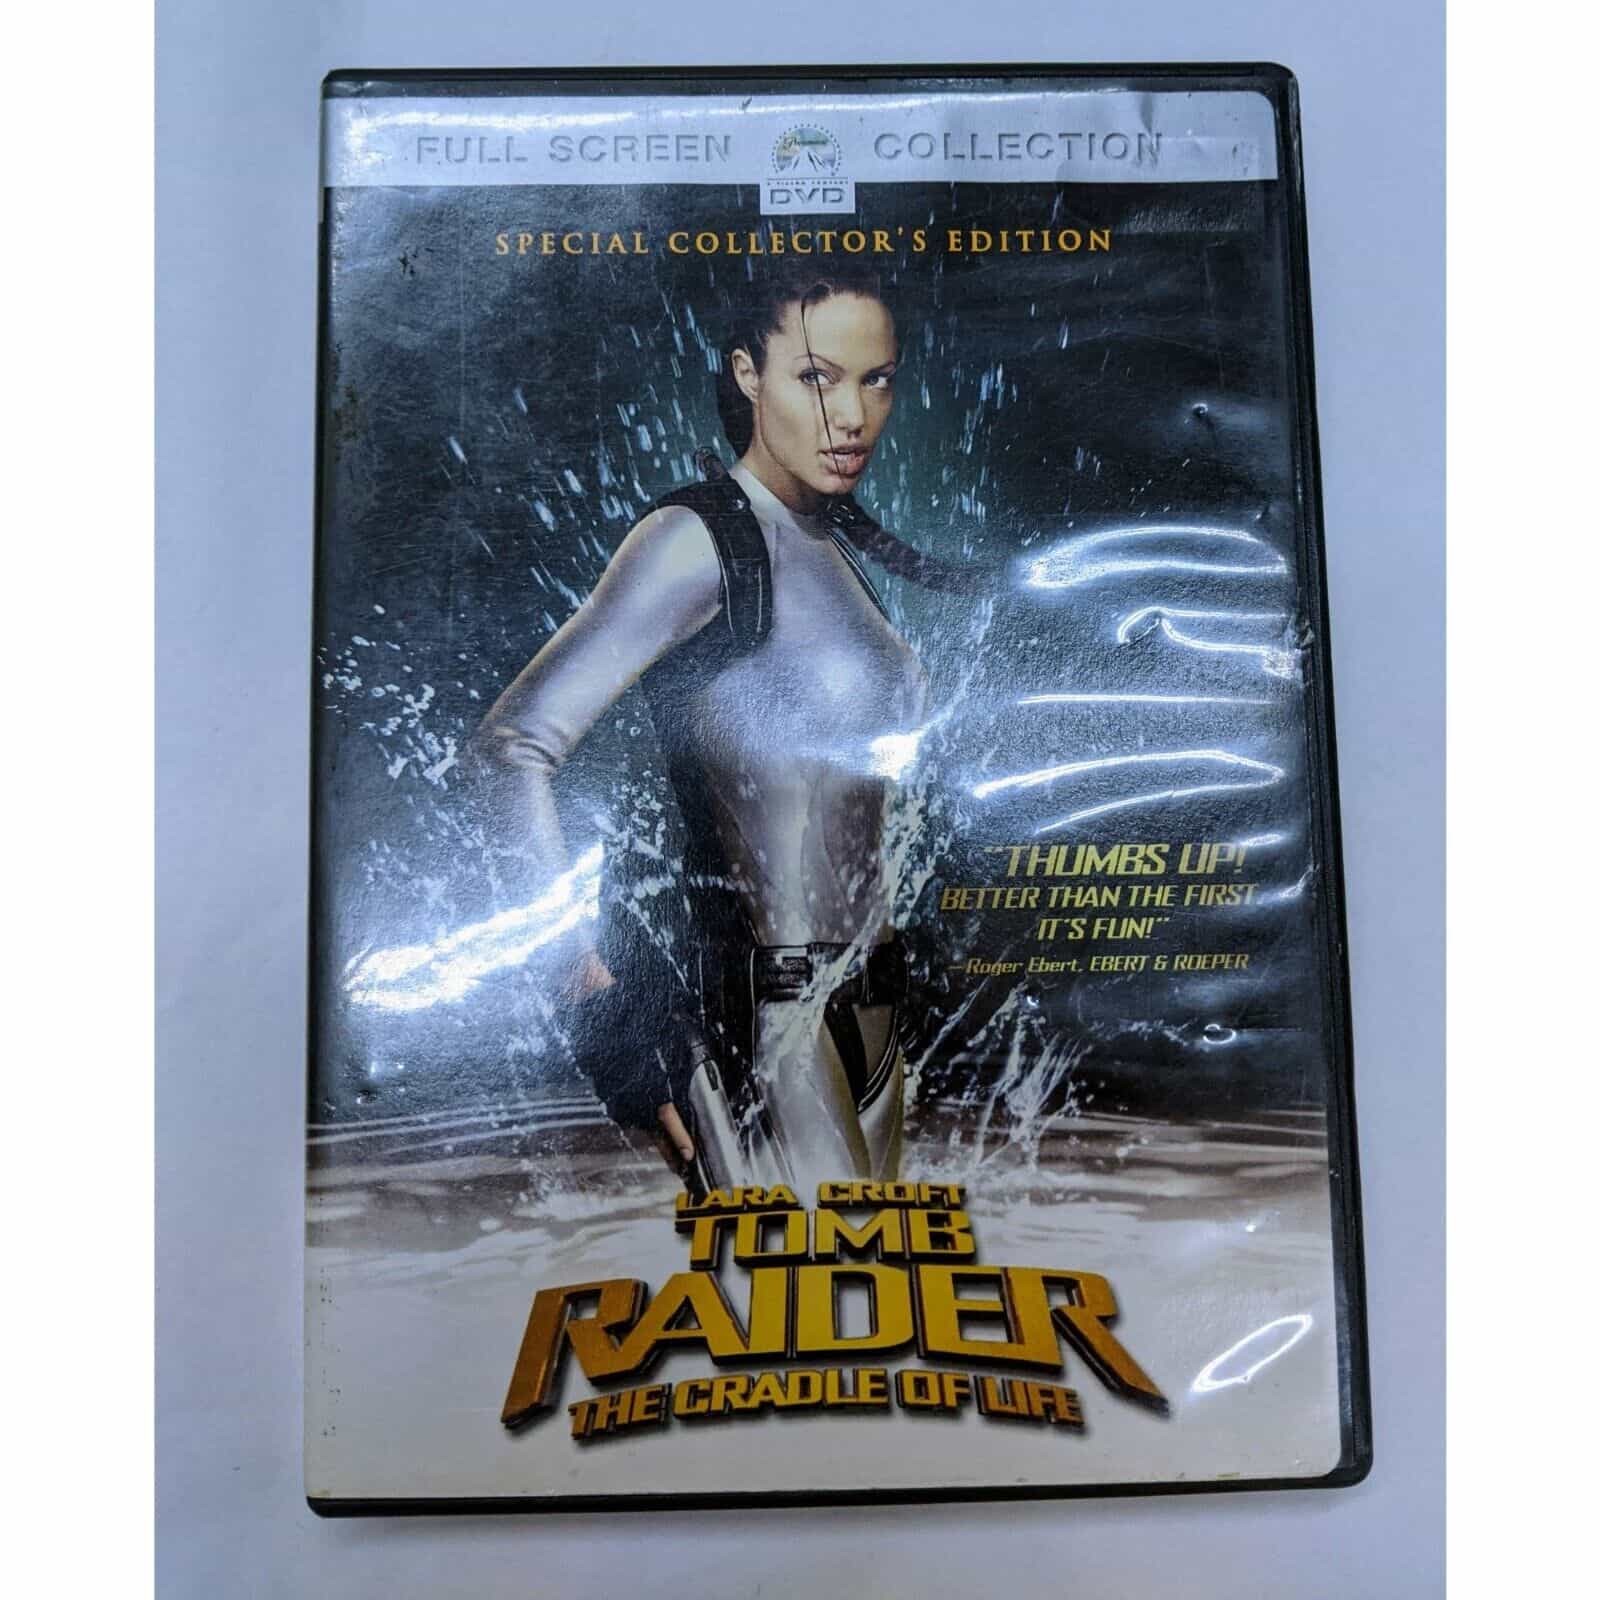 Lara Croft Tomb Raider The Cradle Of Life DVD Movie – Full Screen Edition